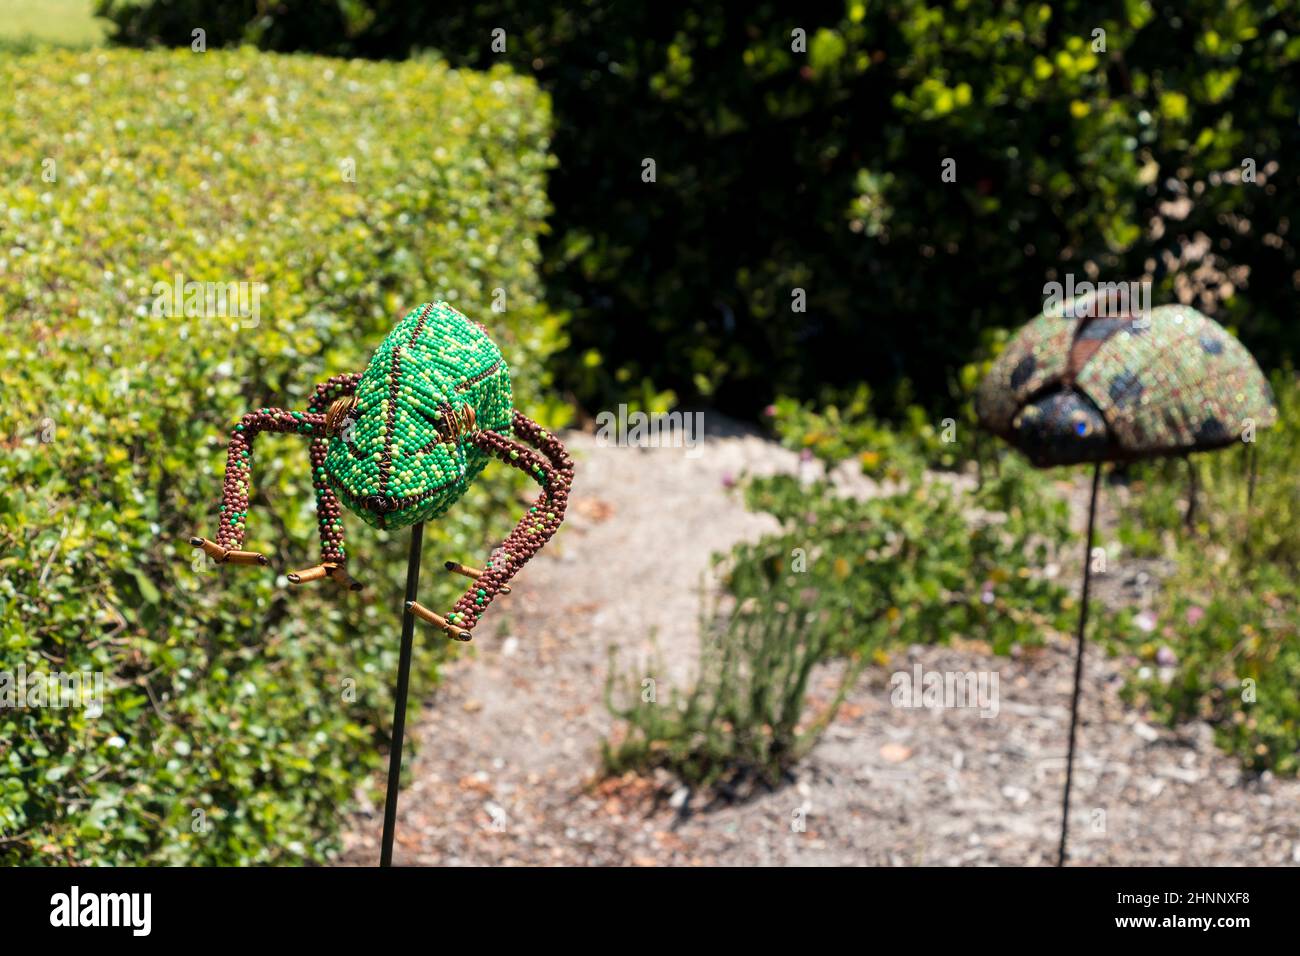 Decorative animals in the garden, flowerbed. Lizard, gecko, reptiles, amphibians. Stock Photo